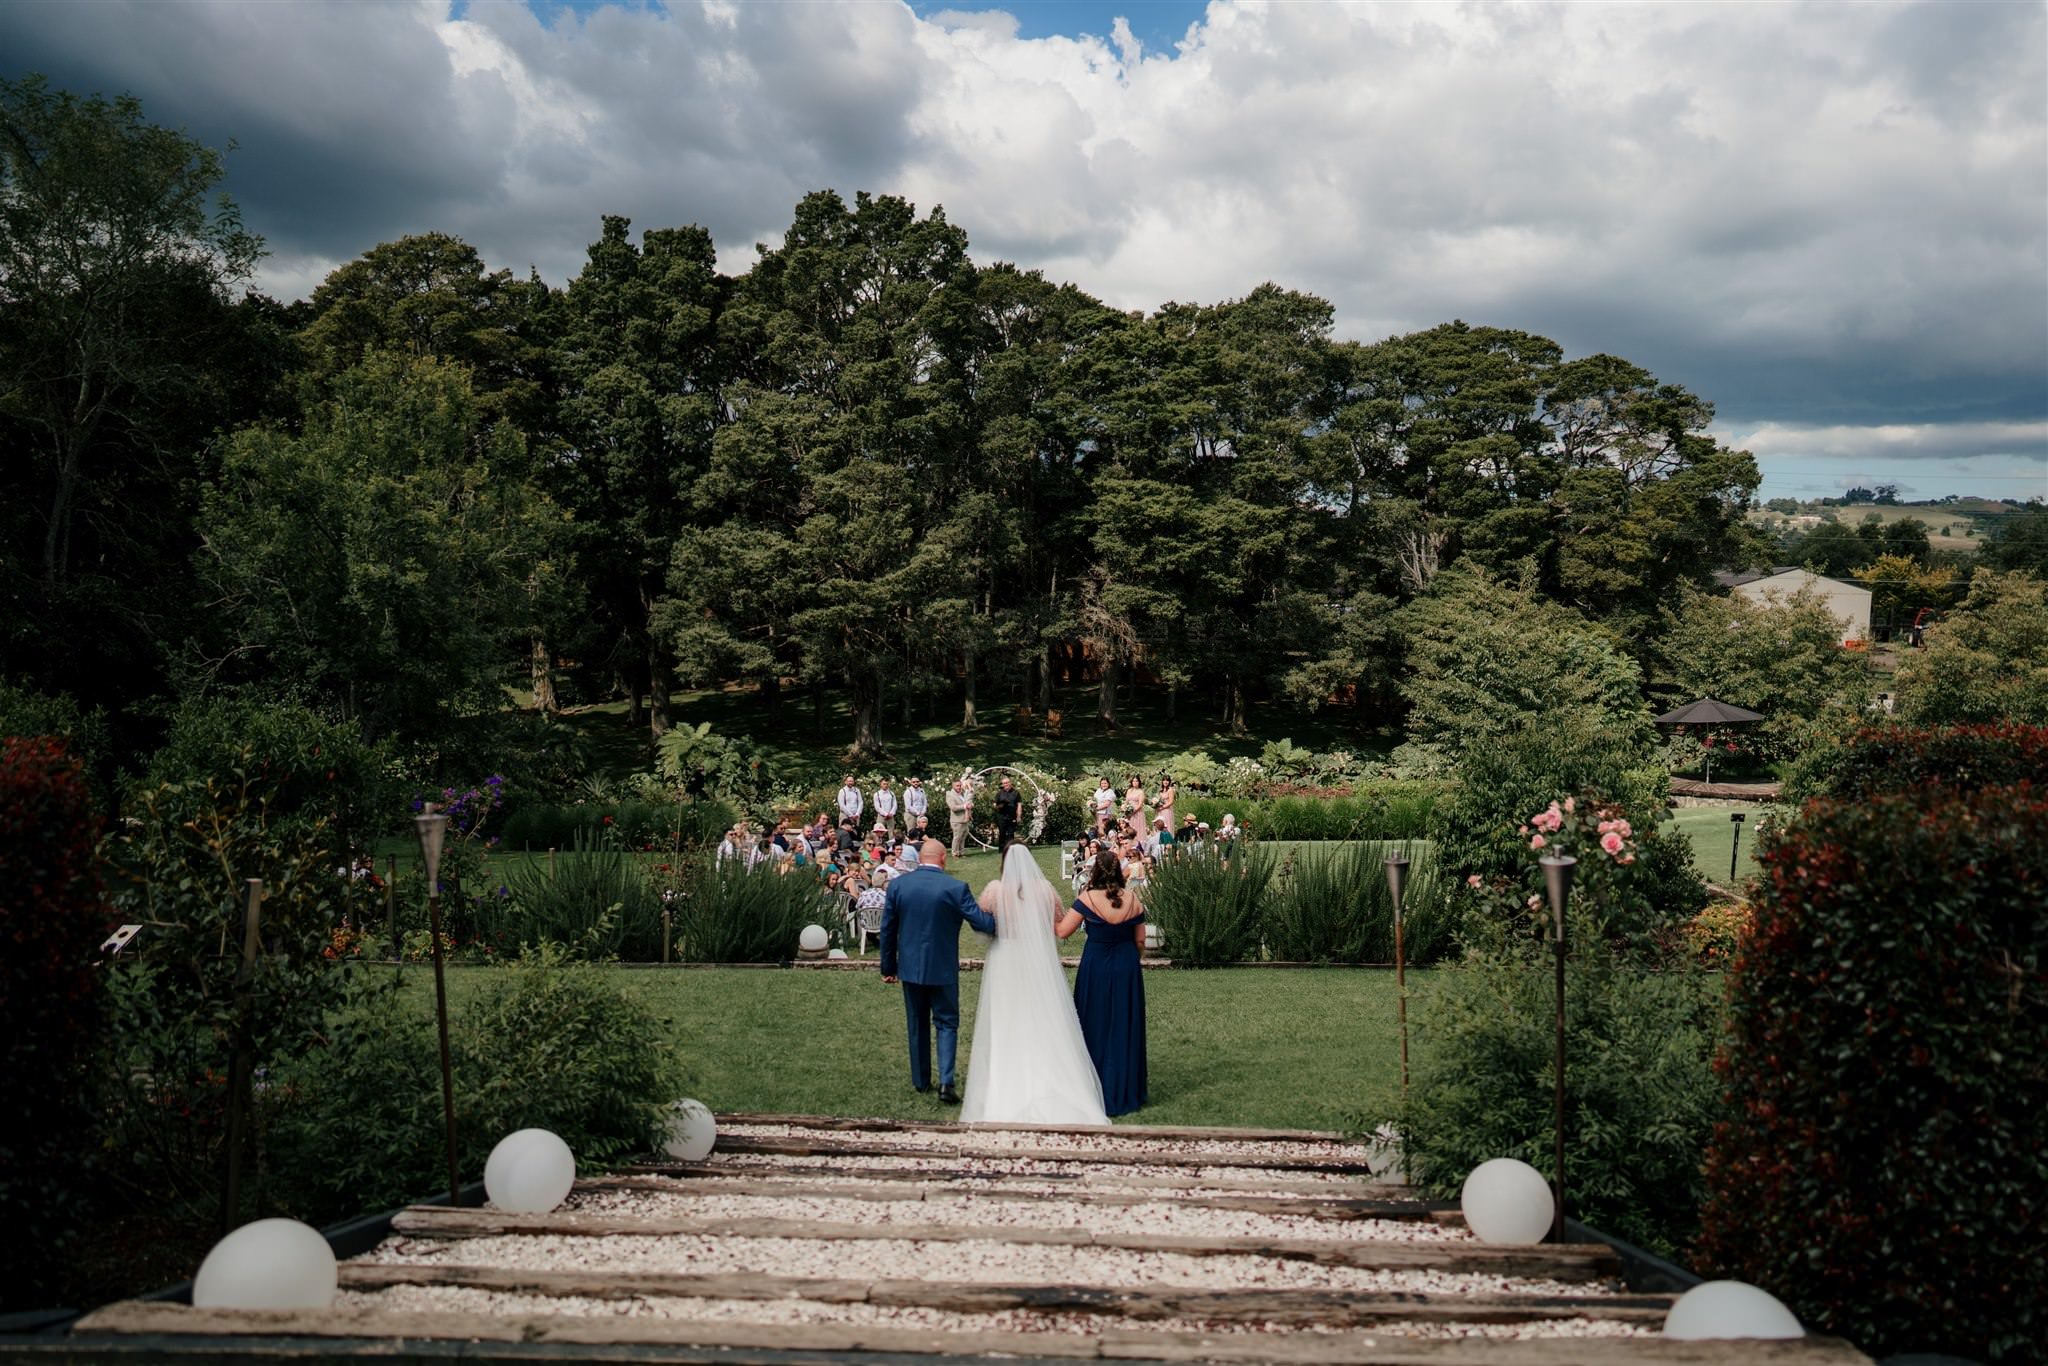 Winsford-Gardens-best-south-auckland-wedding-venue-dear-white-productions-photographer-videography-elegant-new-zealand (39).jpg